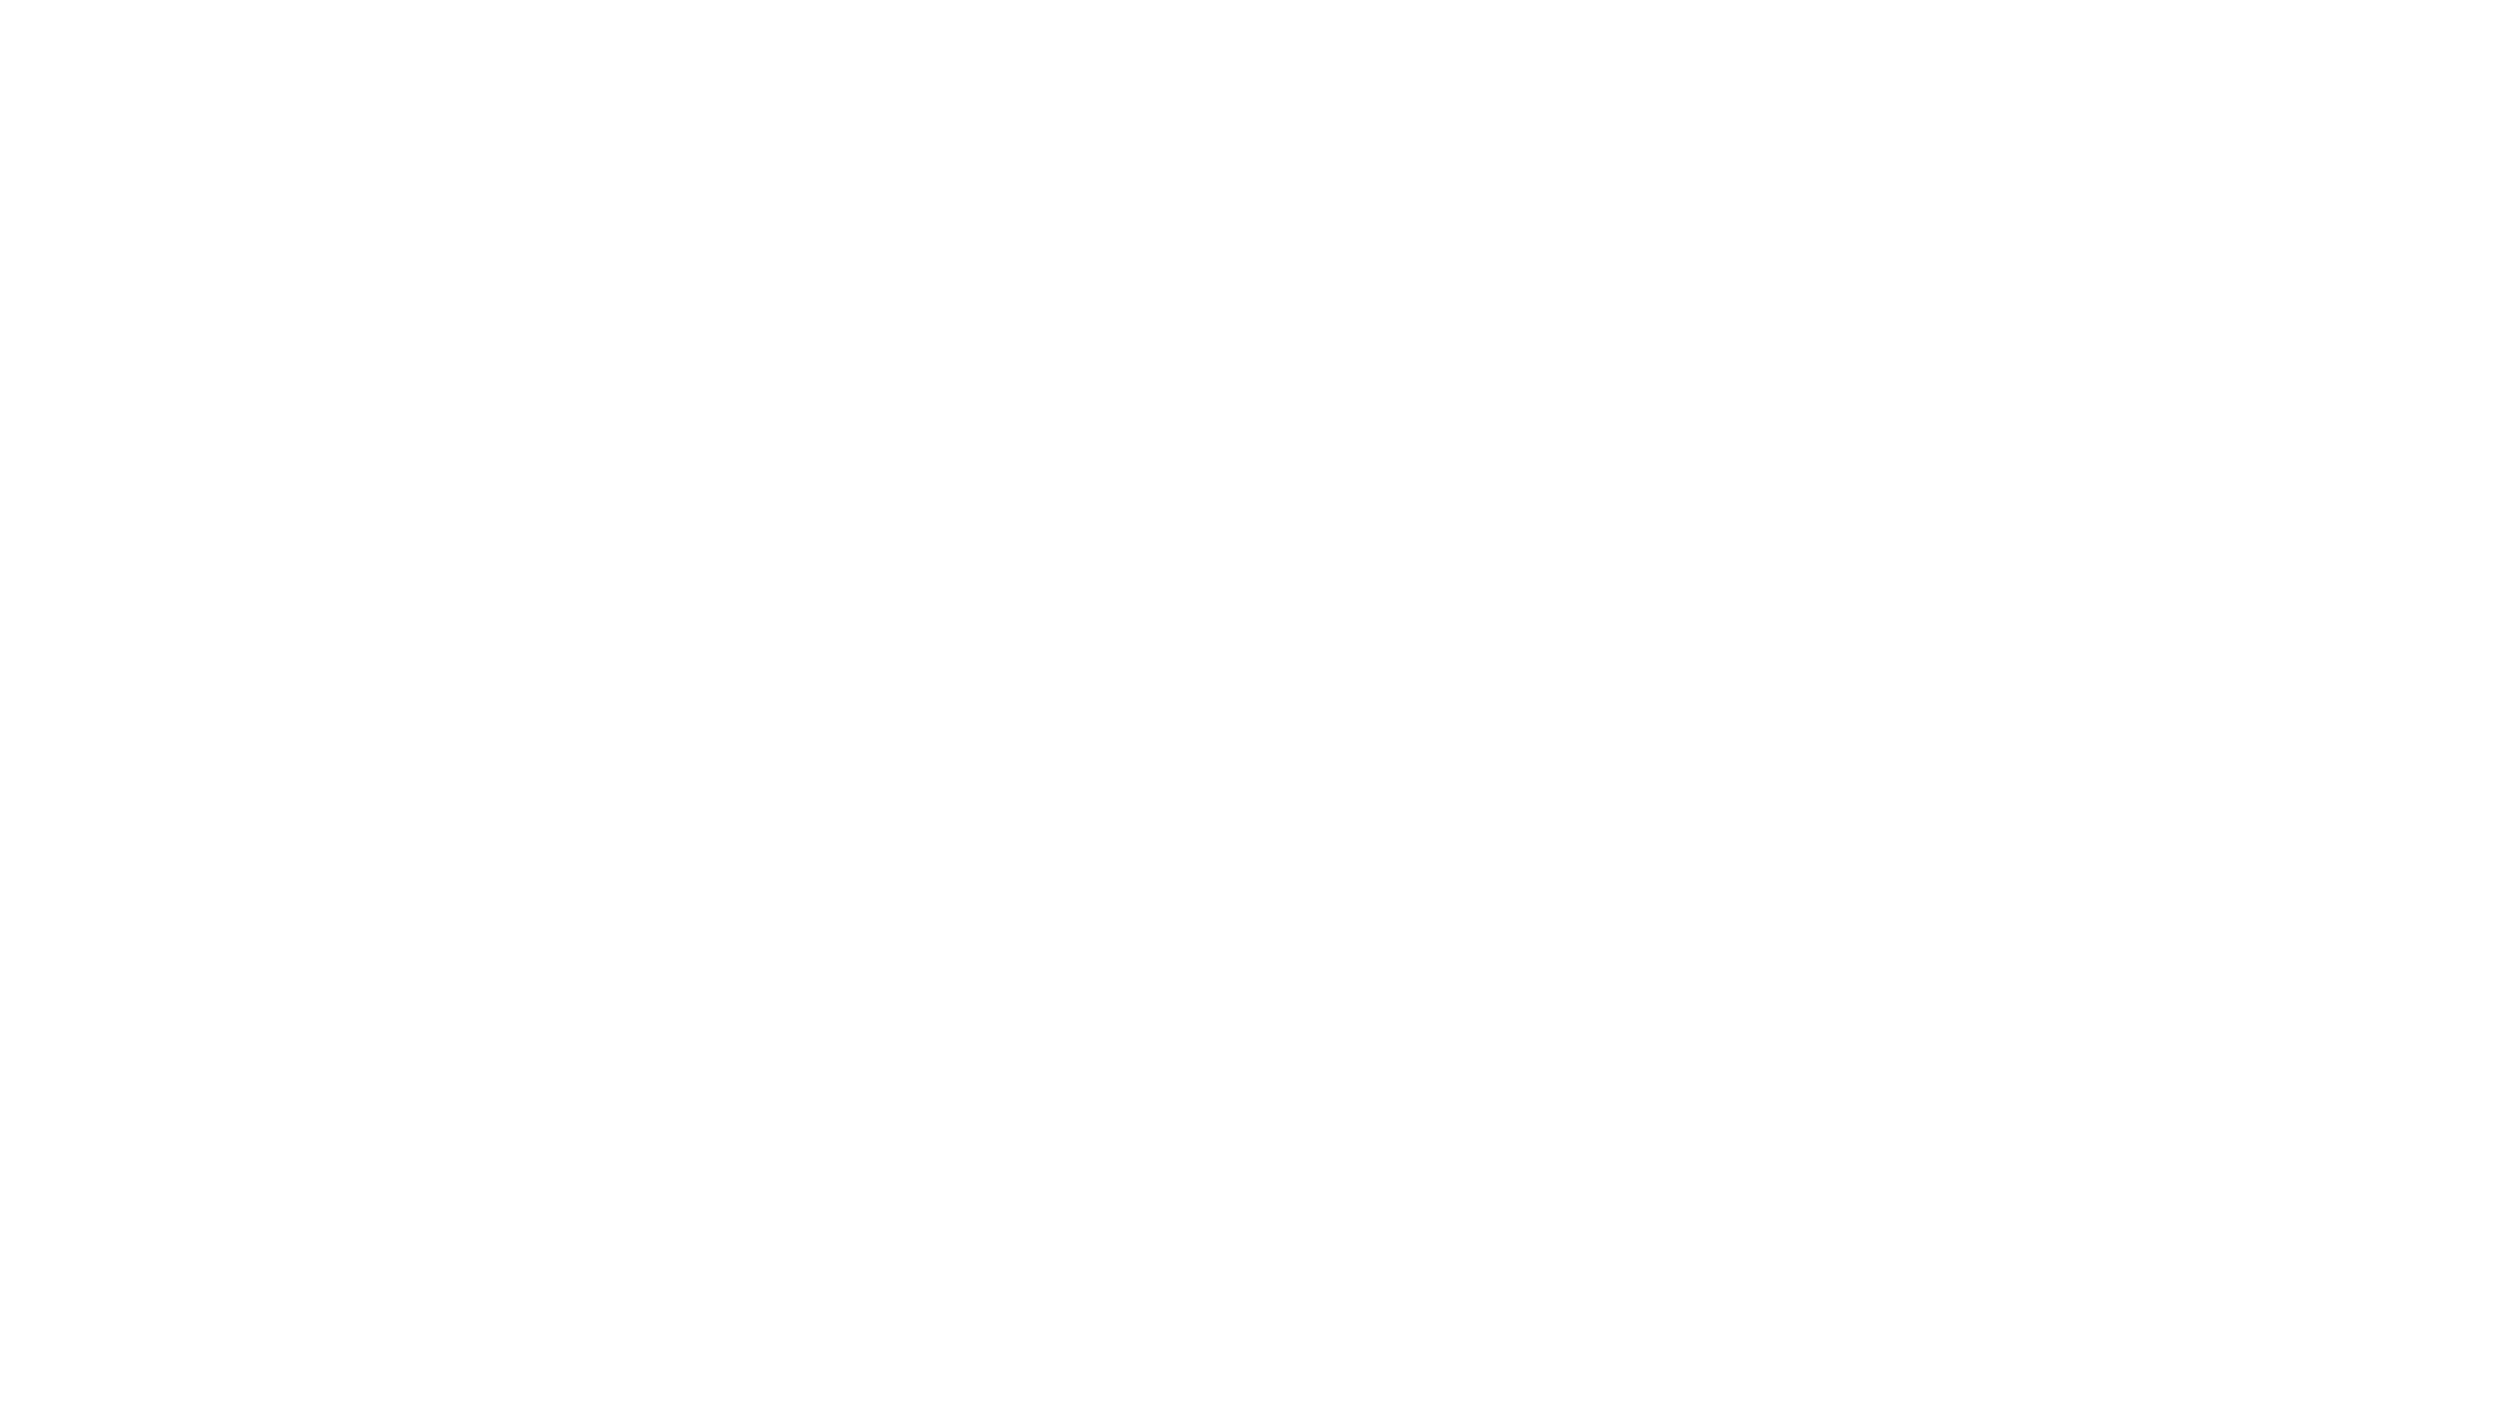 Amplify Chicago